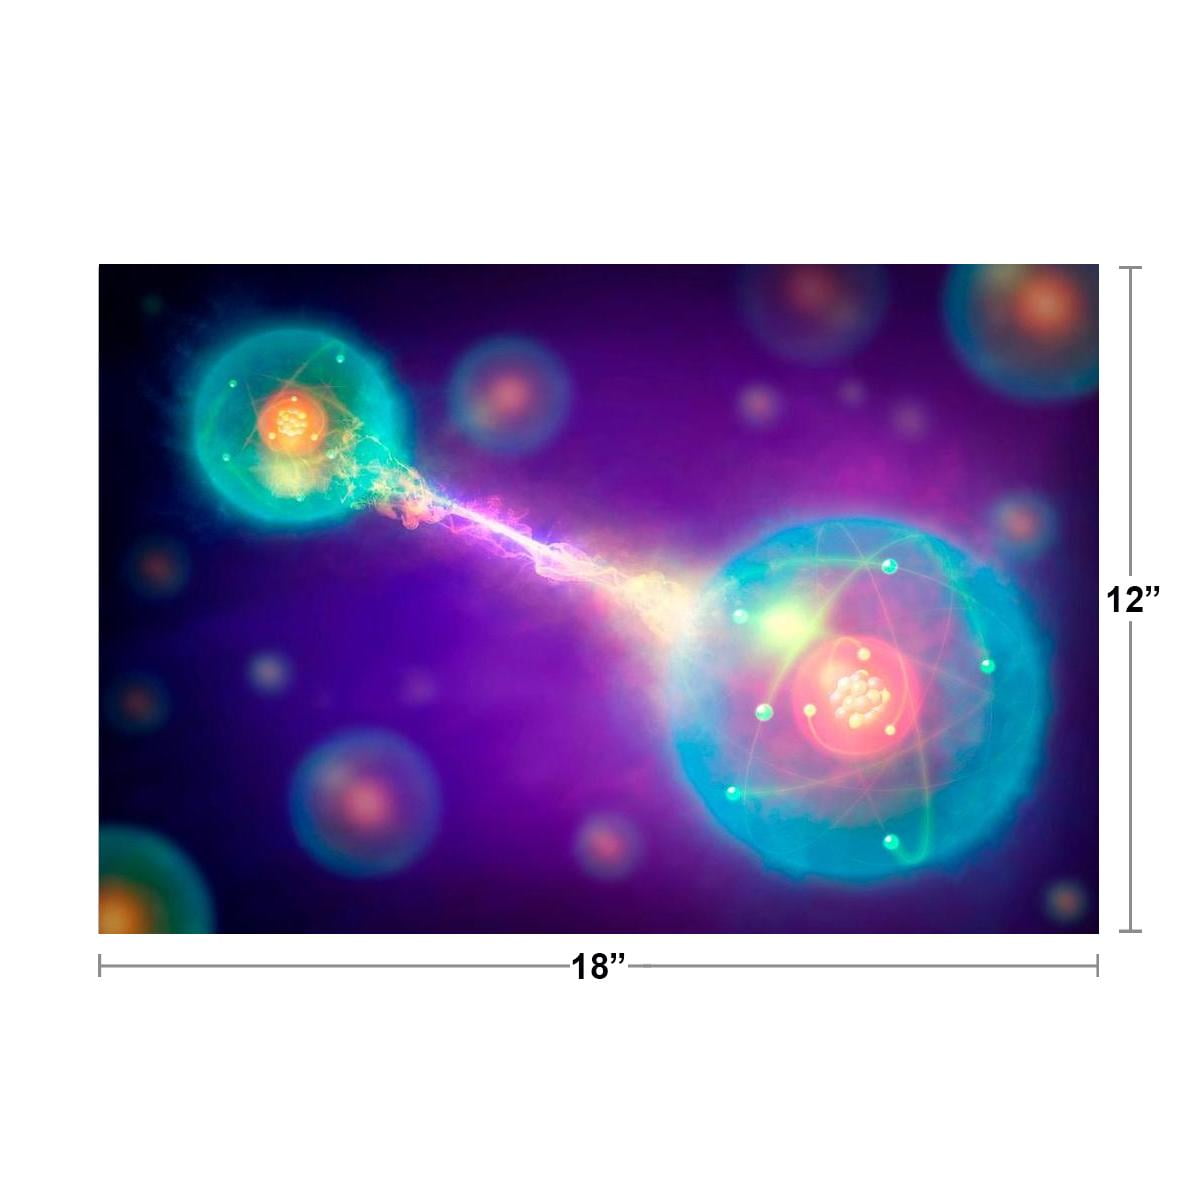 Quantum Entanglement Atoms Attracting Science Diagram Poster 18x12 inch 